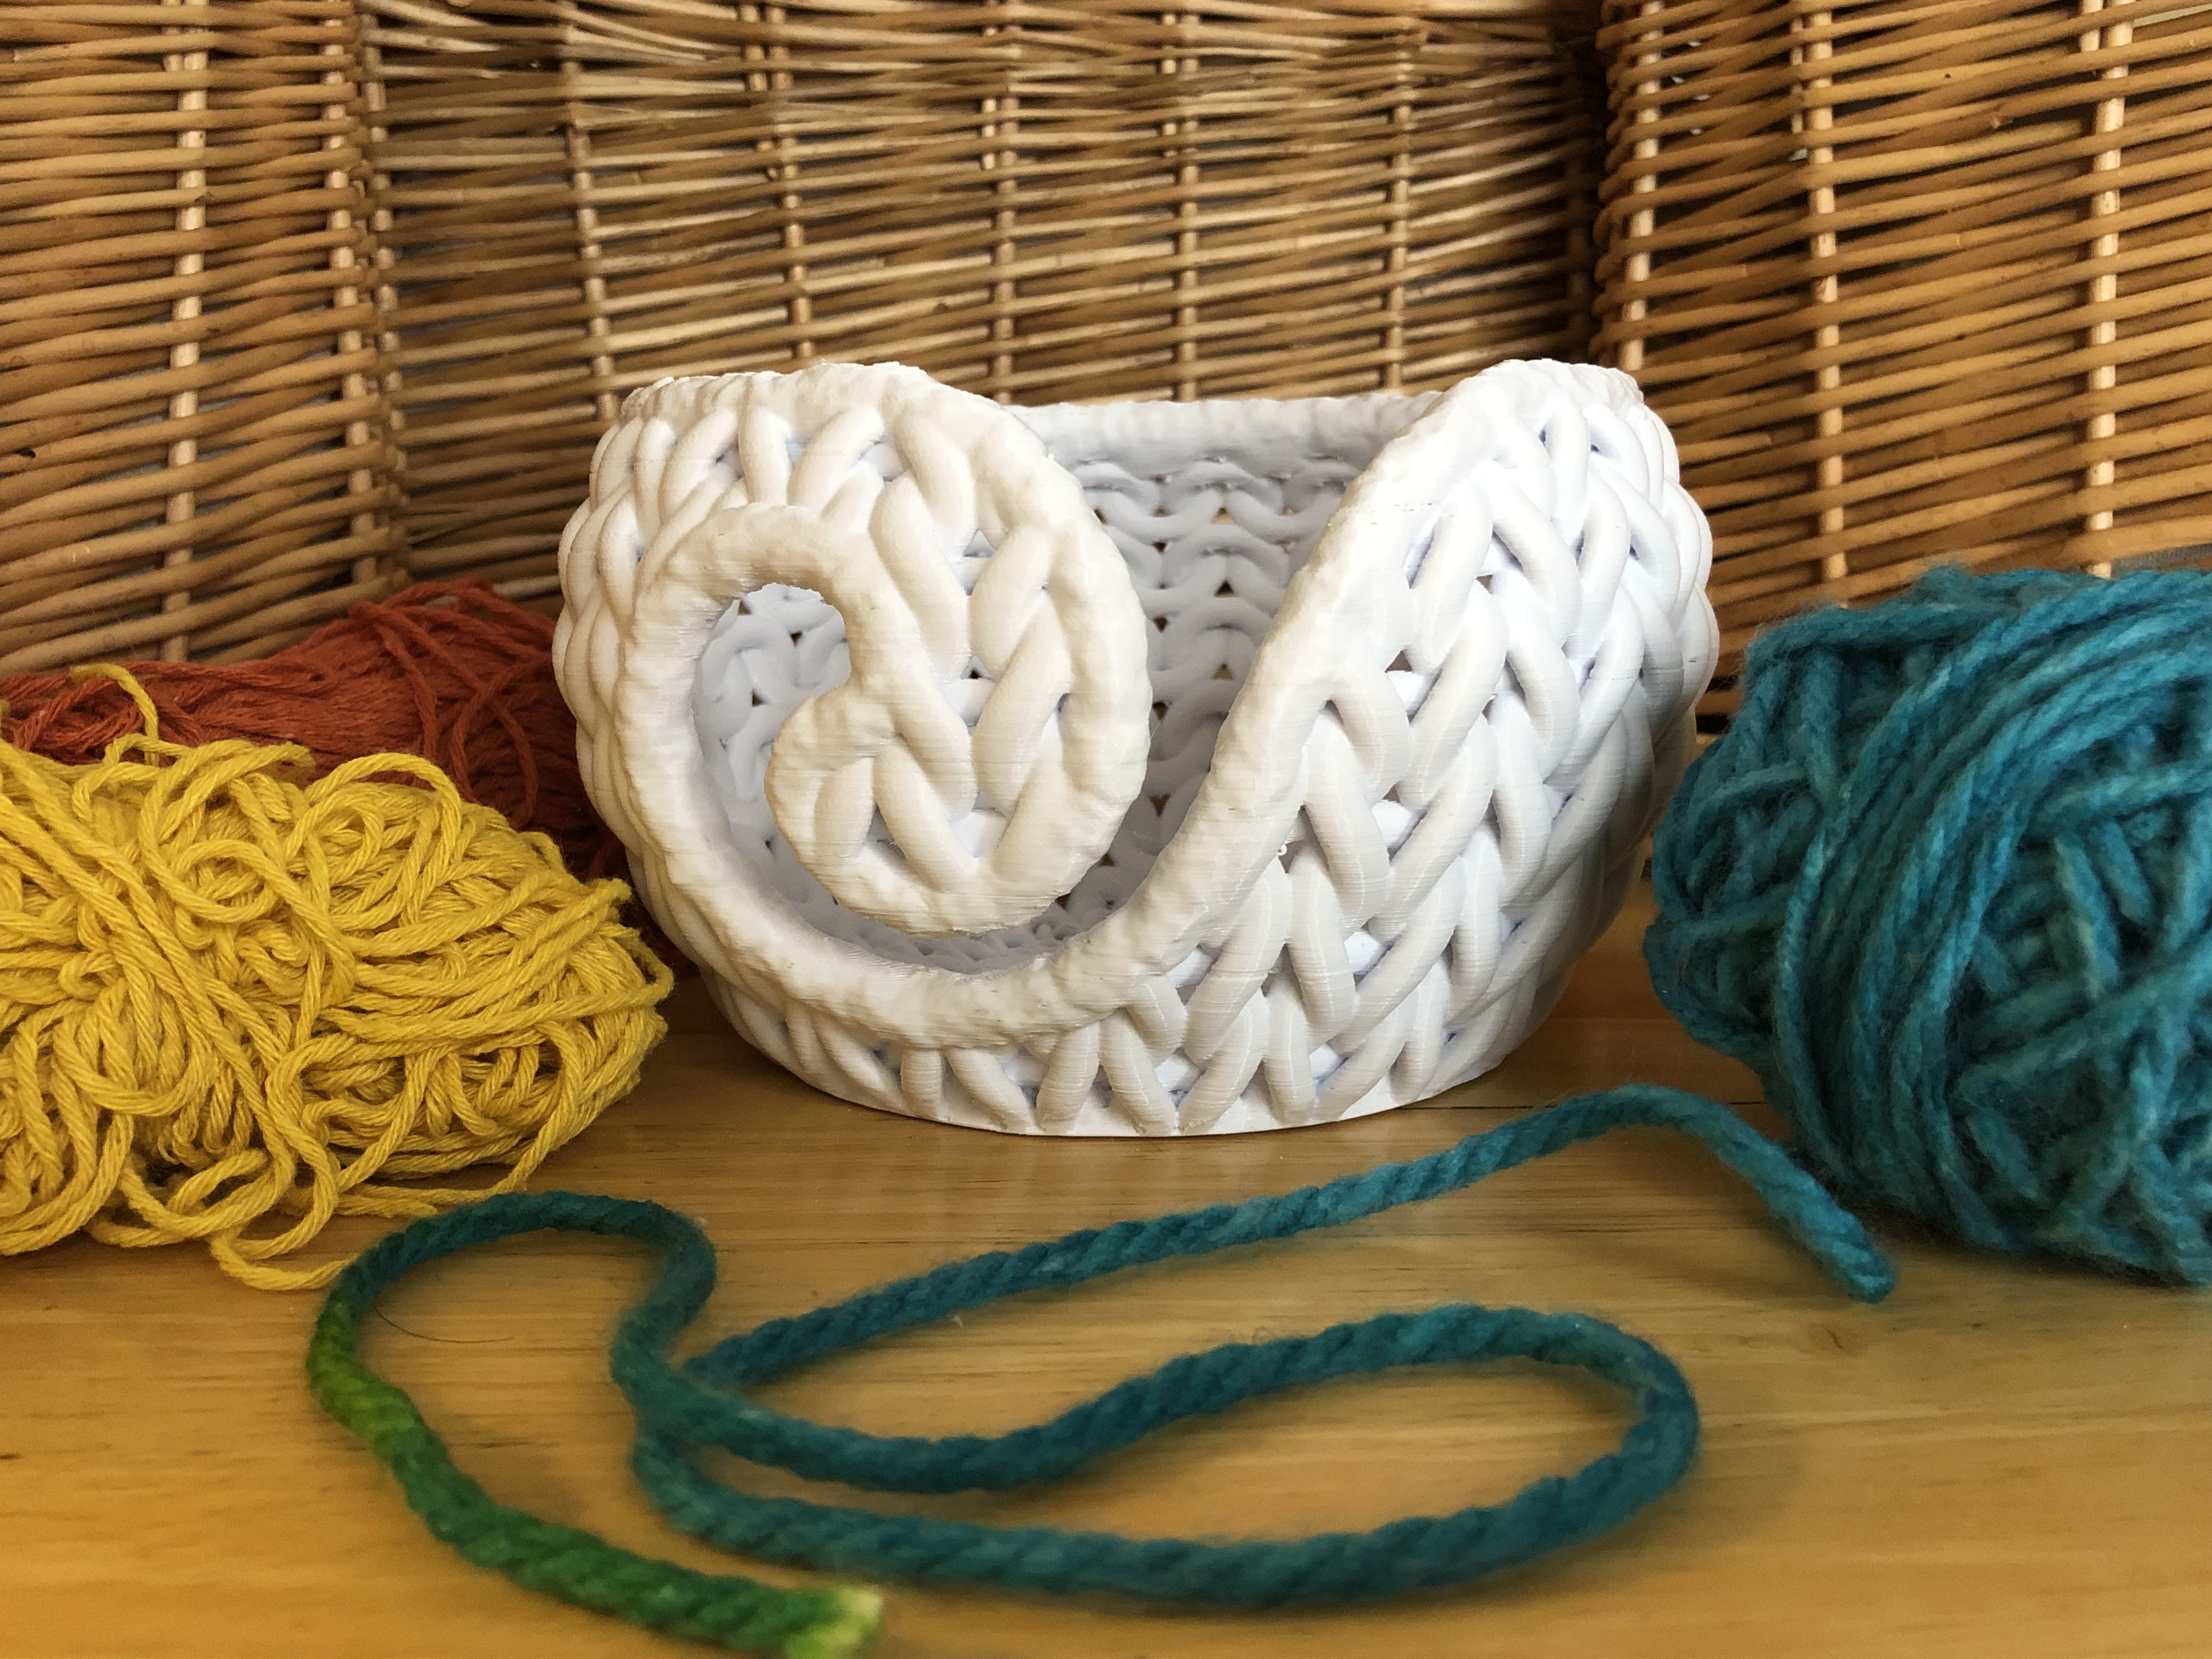 3d printed a yarn bowl that can hold both my socks! : r/knitting